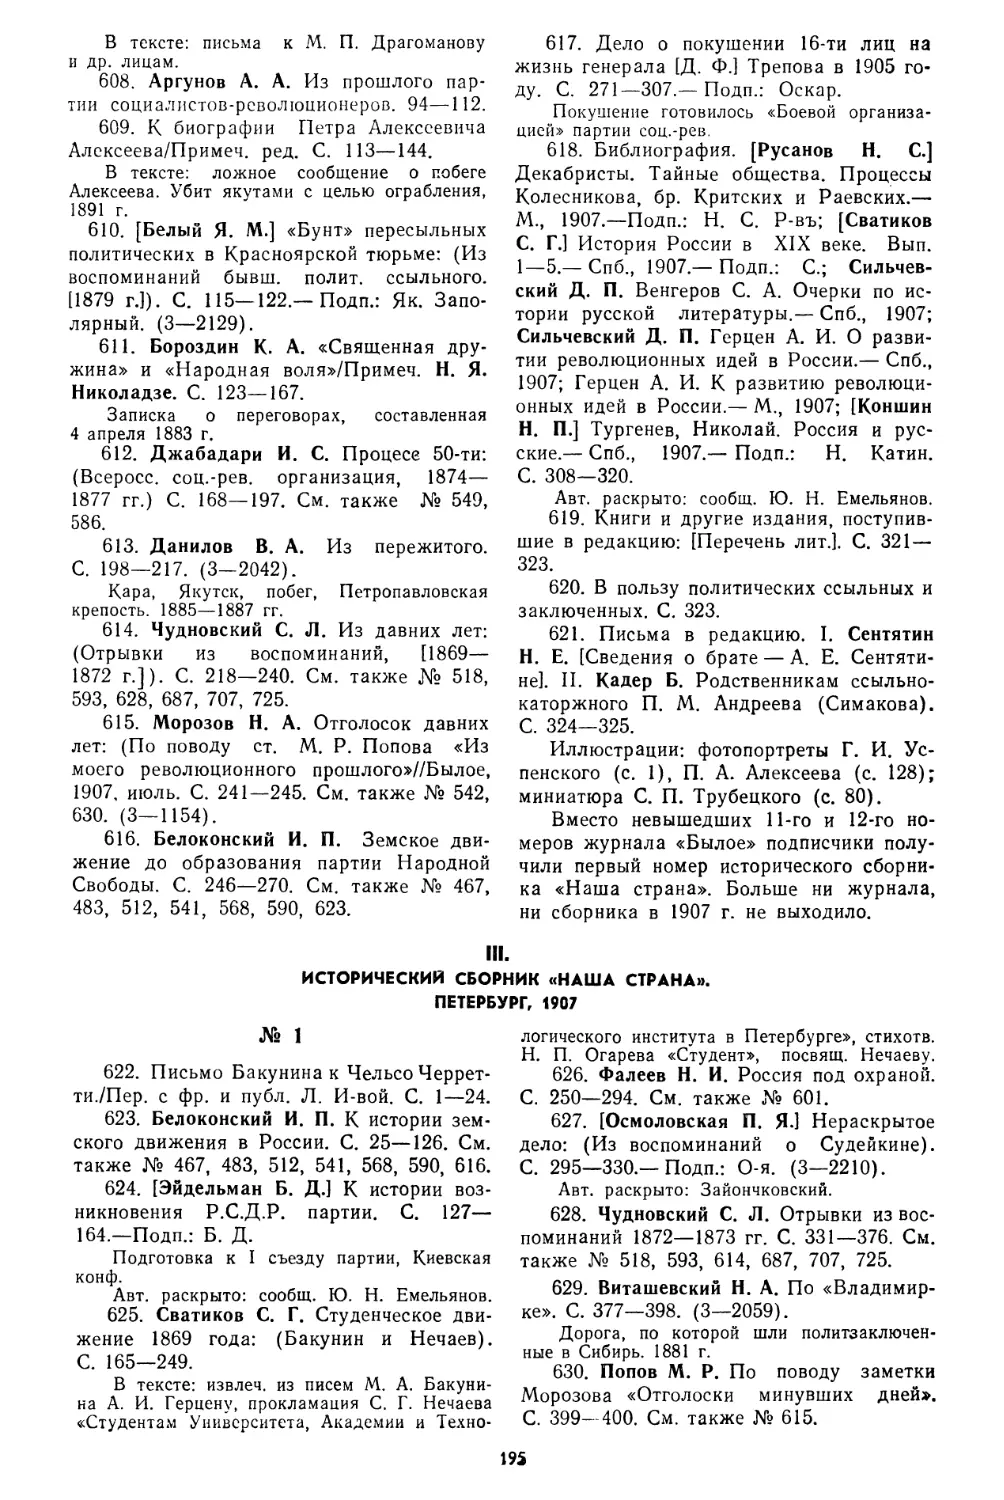 III. Исторический сборник «Наша страна». Петербург, 1907, № 622—630